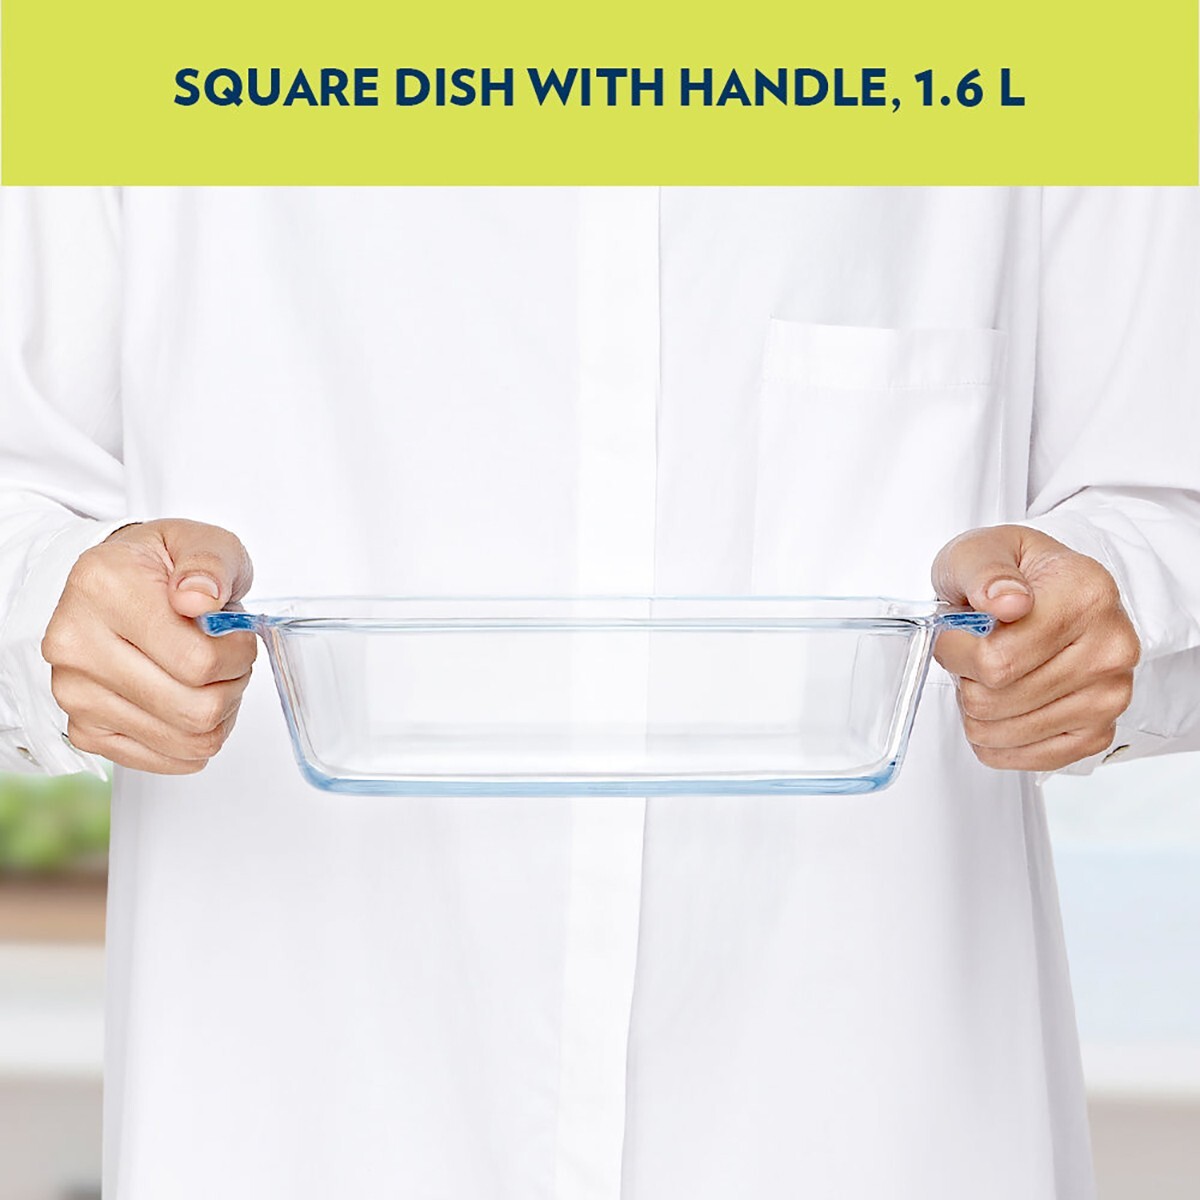 Borosil Square Dish With Handle 1.6L-2216